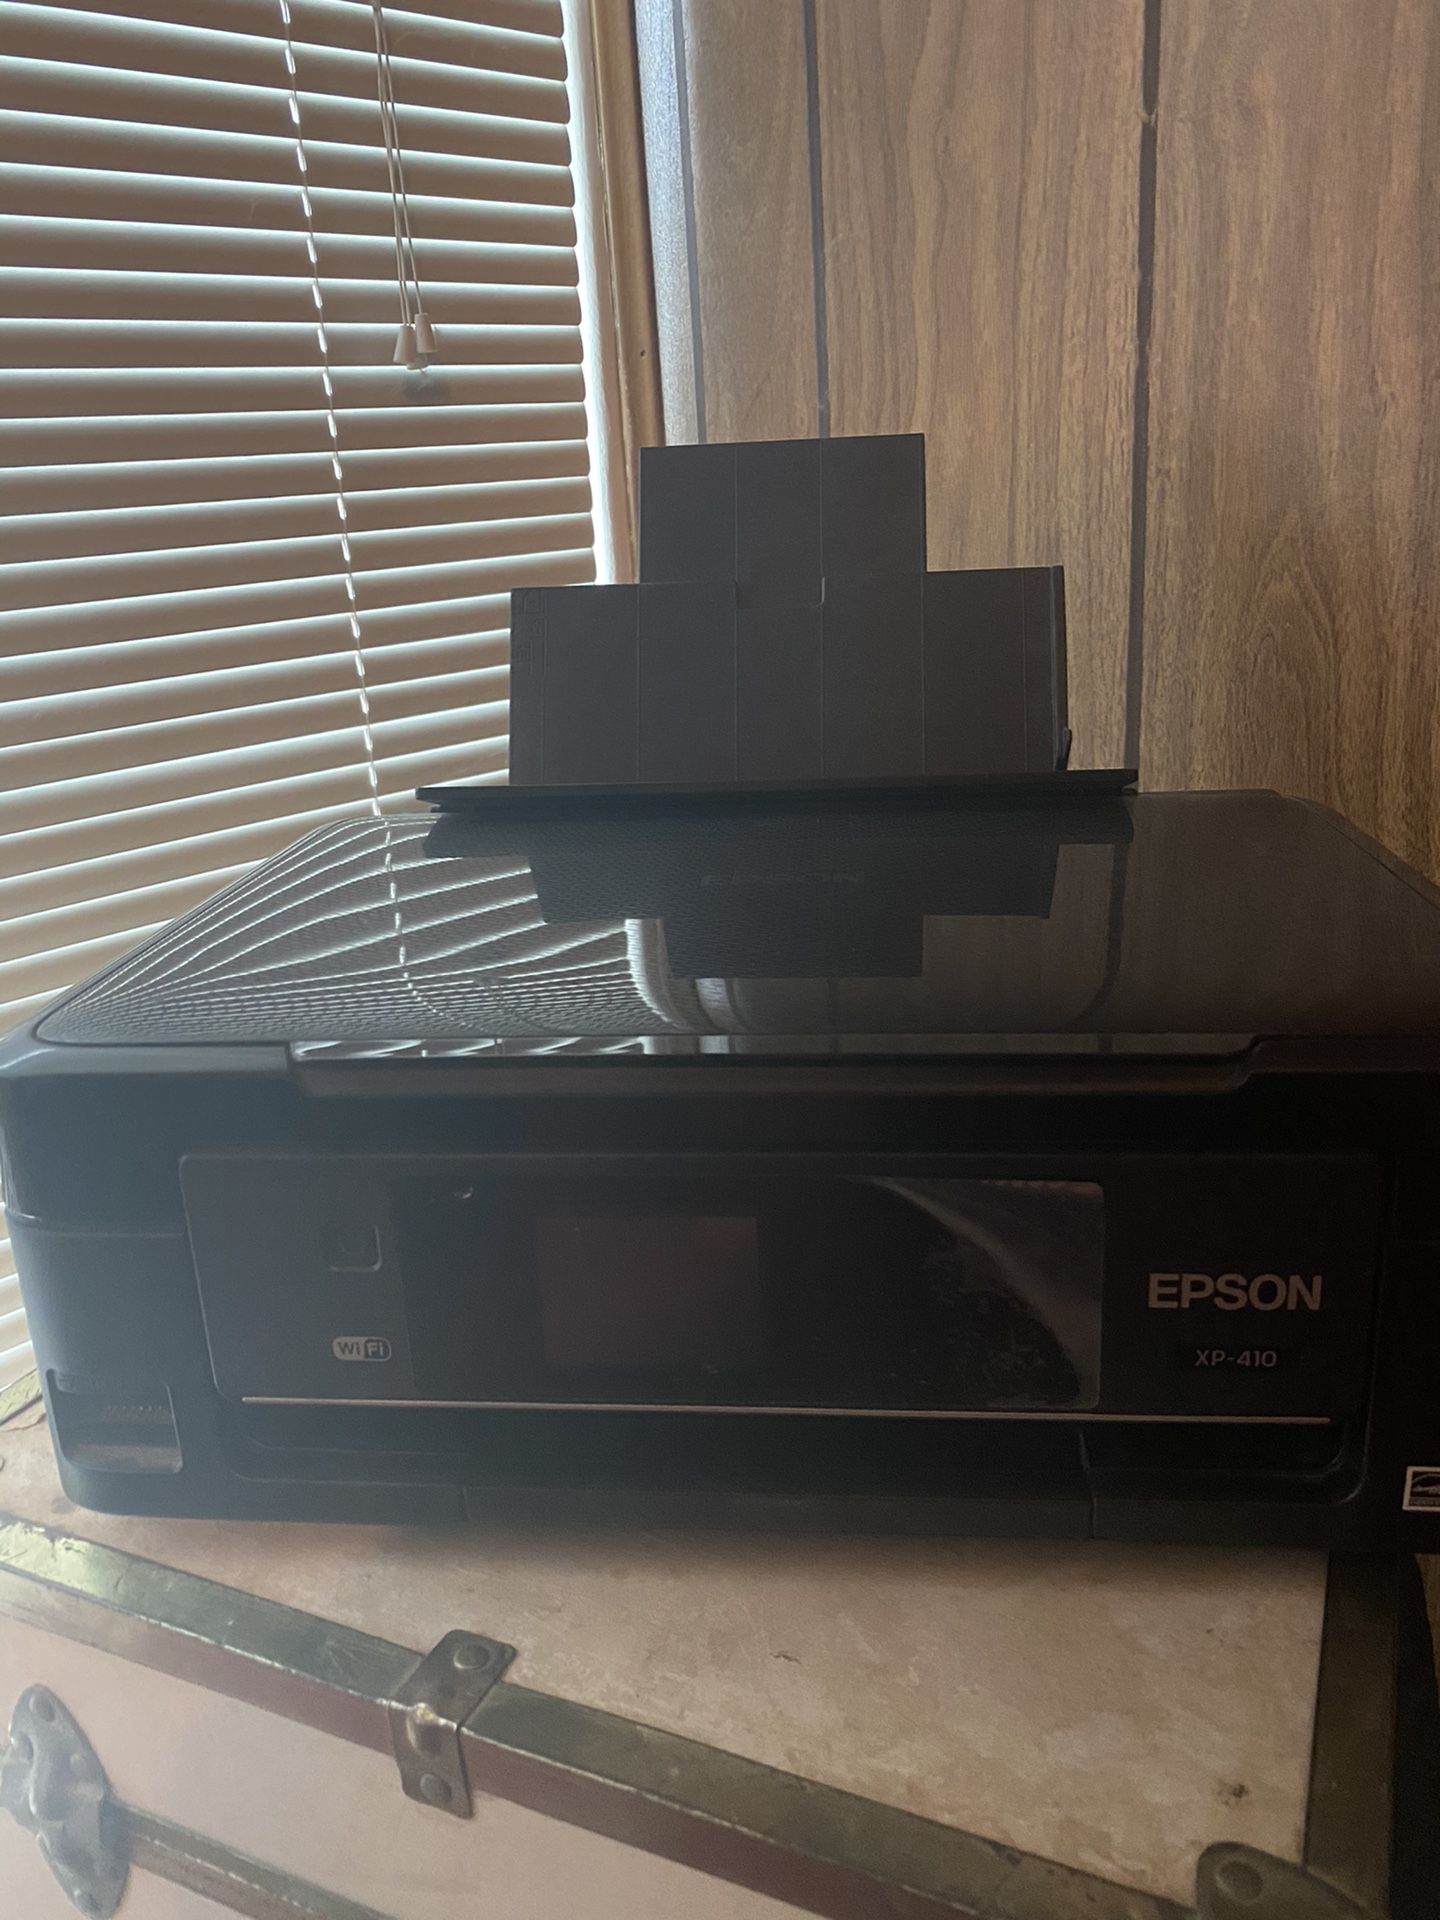 EPSON Wireless printer